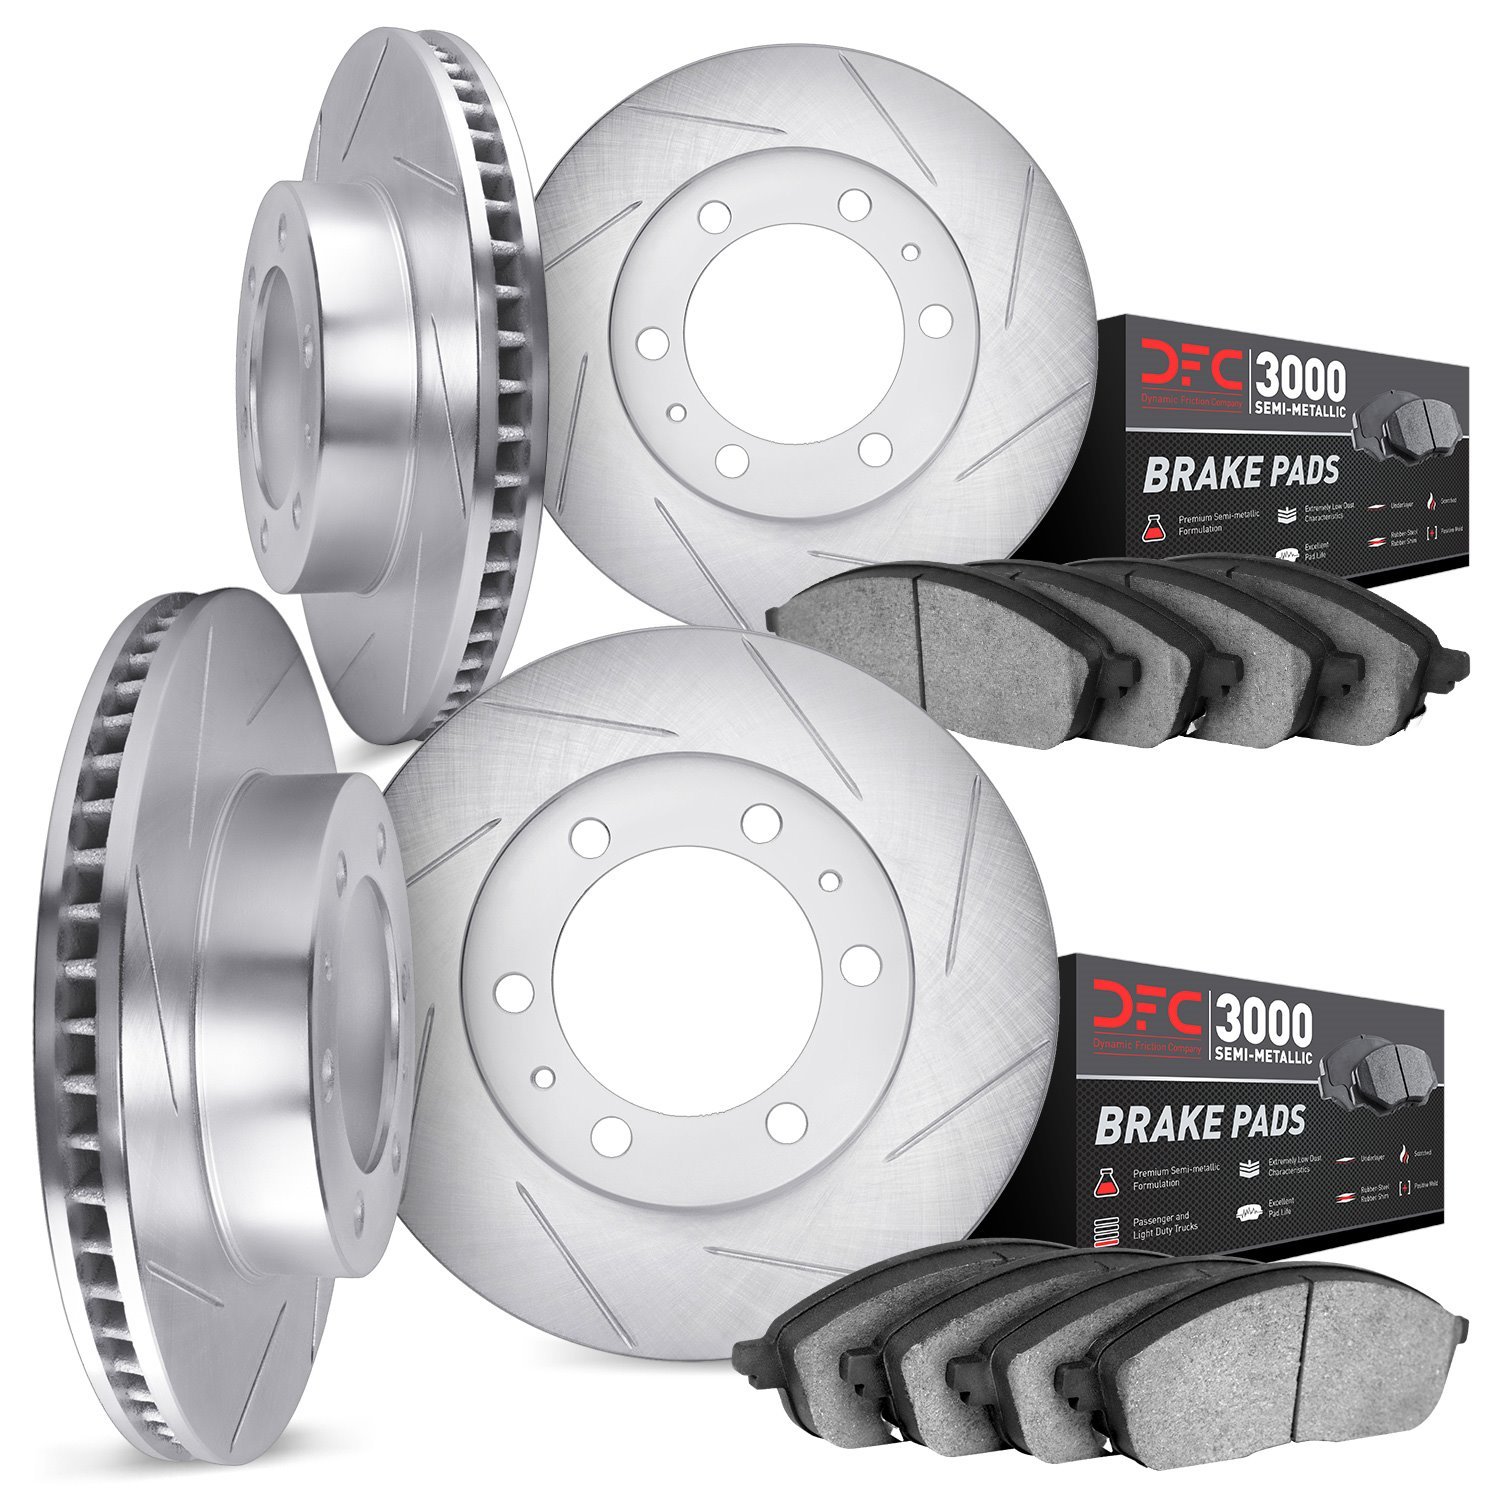 5114-48028 Slotted Brake Rotors with 3000-Series Semi-Metallic Brake Pads Kit & Hardware [Silver], 2007-2017 GM, Position: Front